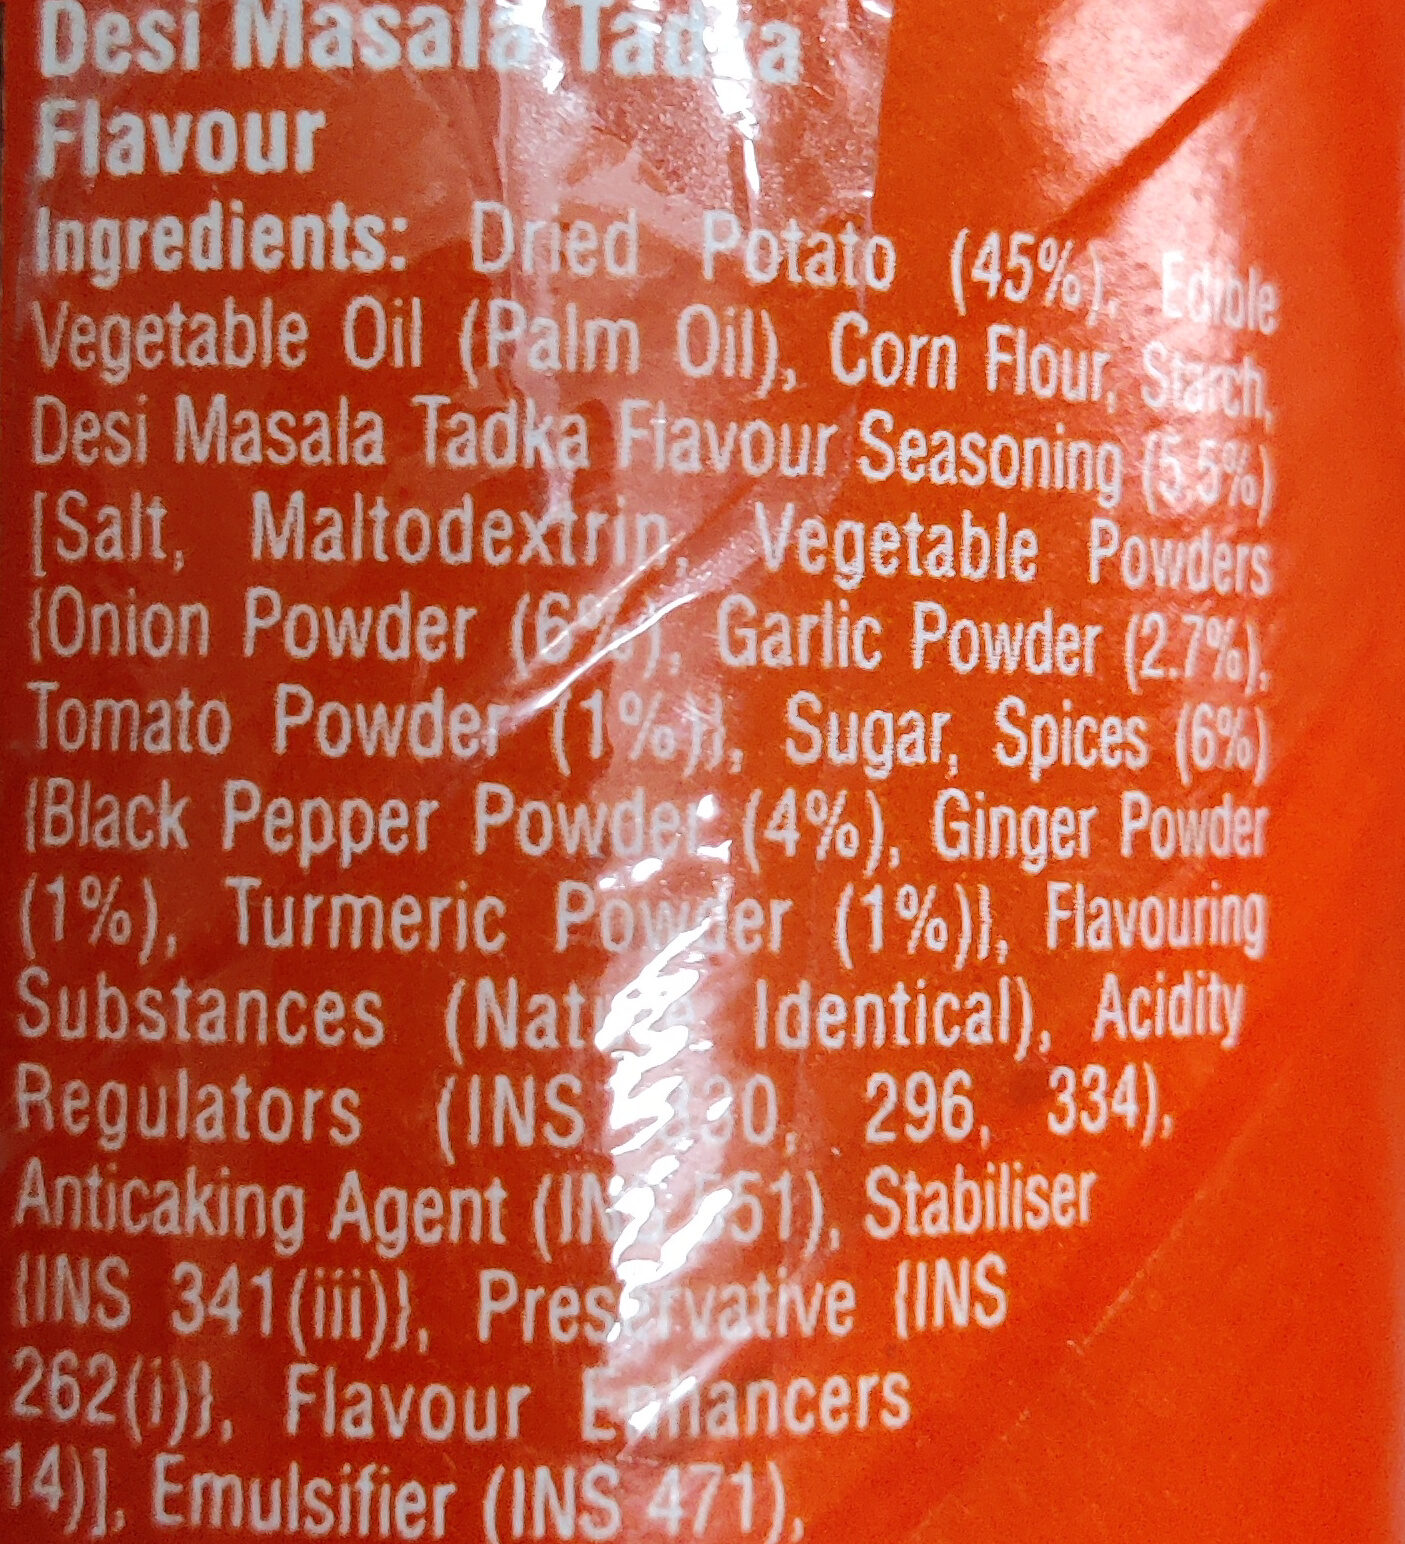 Pringles Desi Masala Tadka Flavour - Ingredients - en